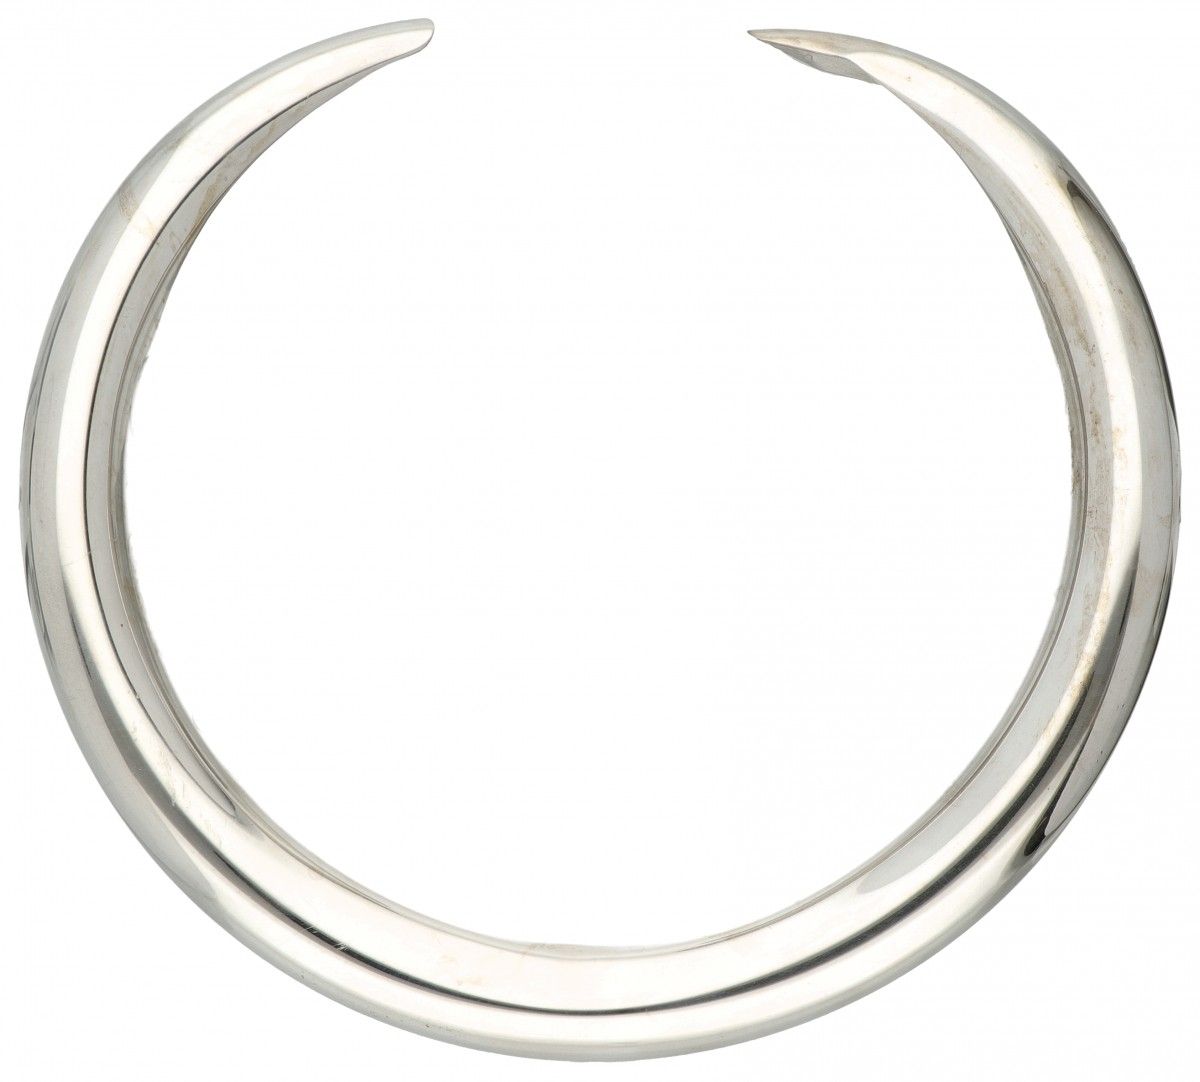 Silver Hermès collar necklace - 925/1000. Hallmarks: Ag 925, LG, French hallmark&hellip;